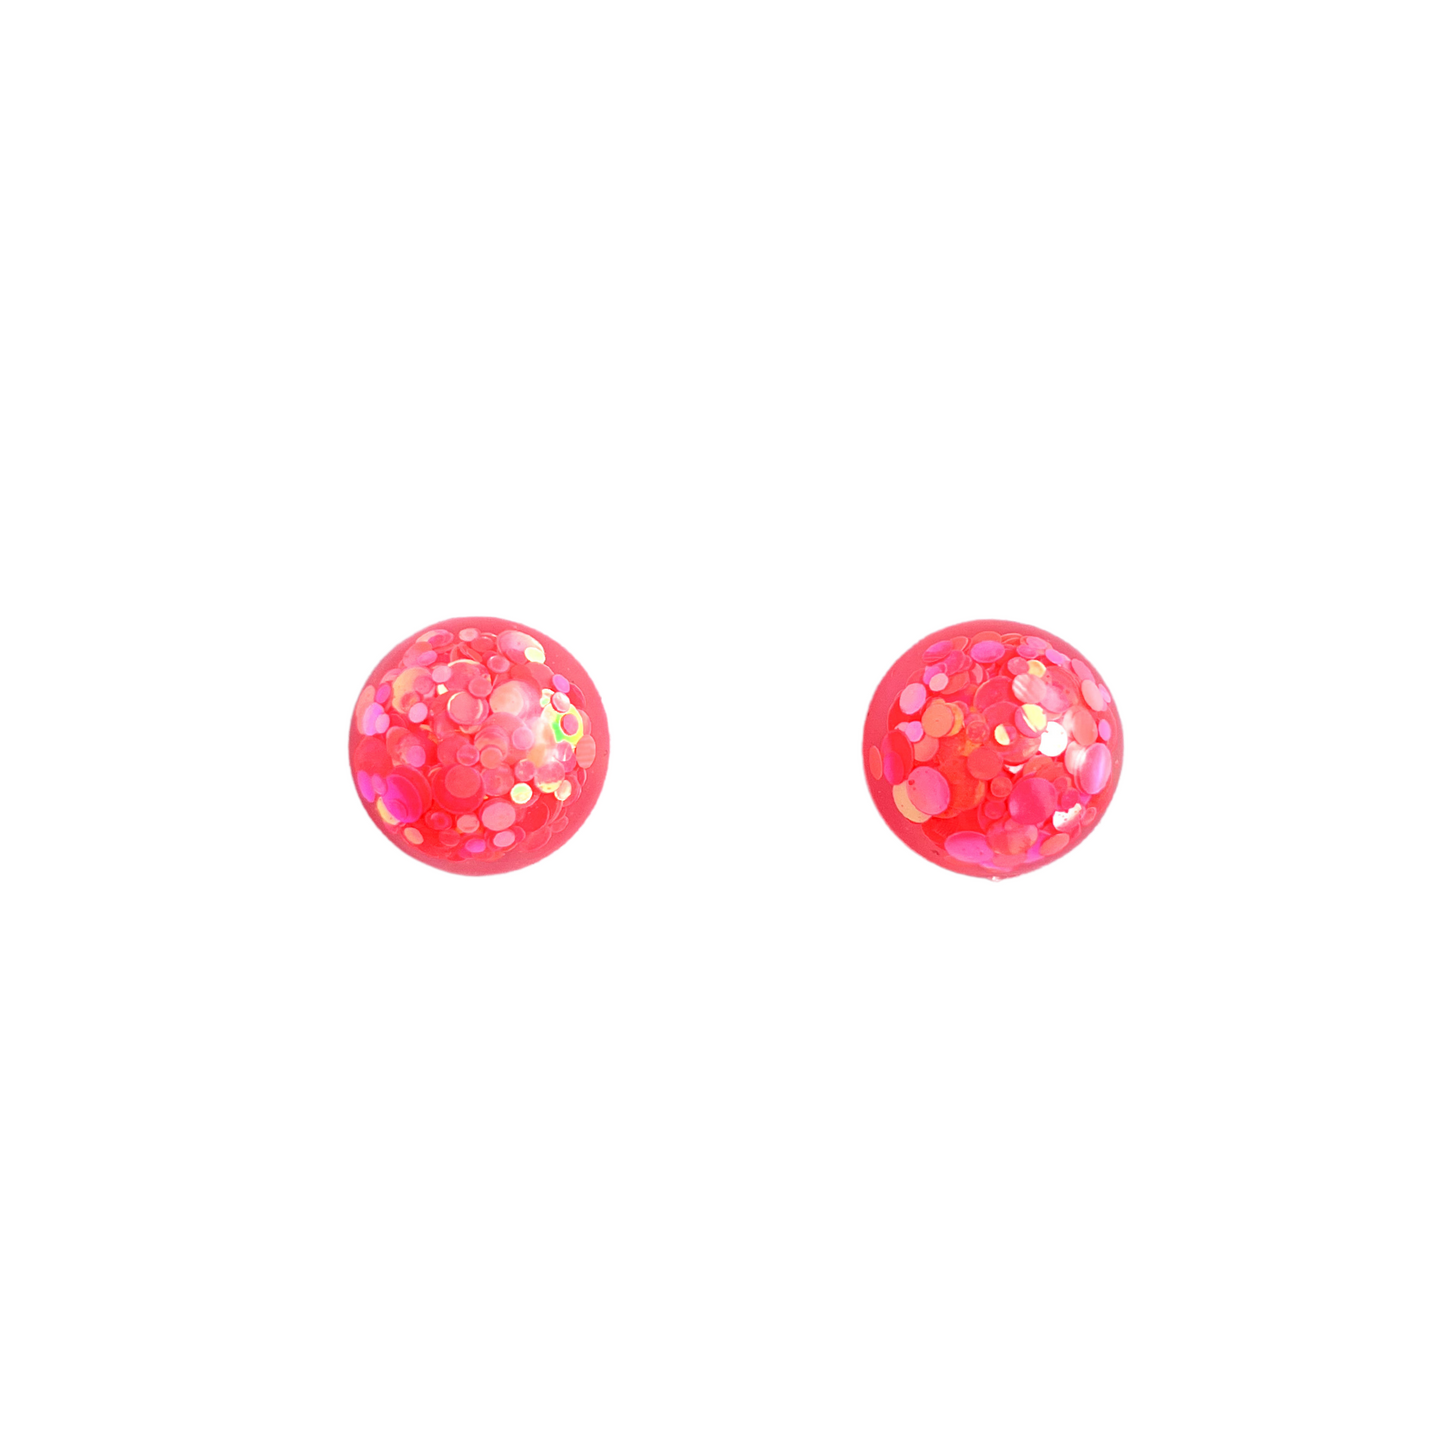 Coral Glitter Stud Earrings for Sensitive Ears